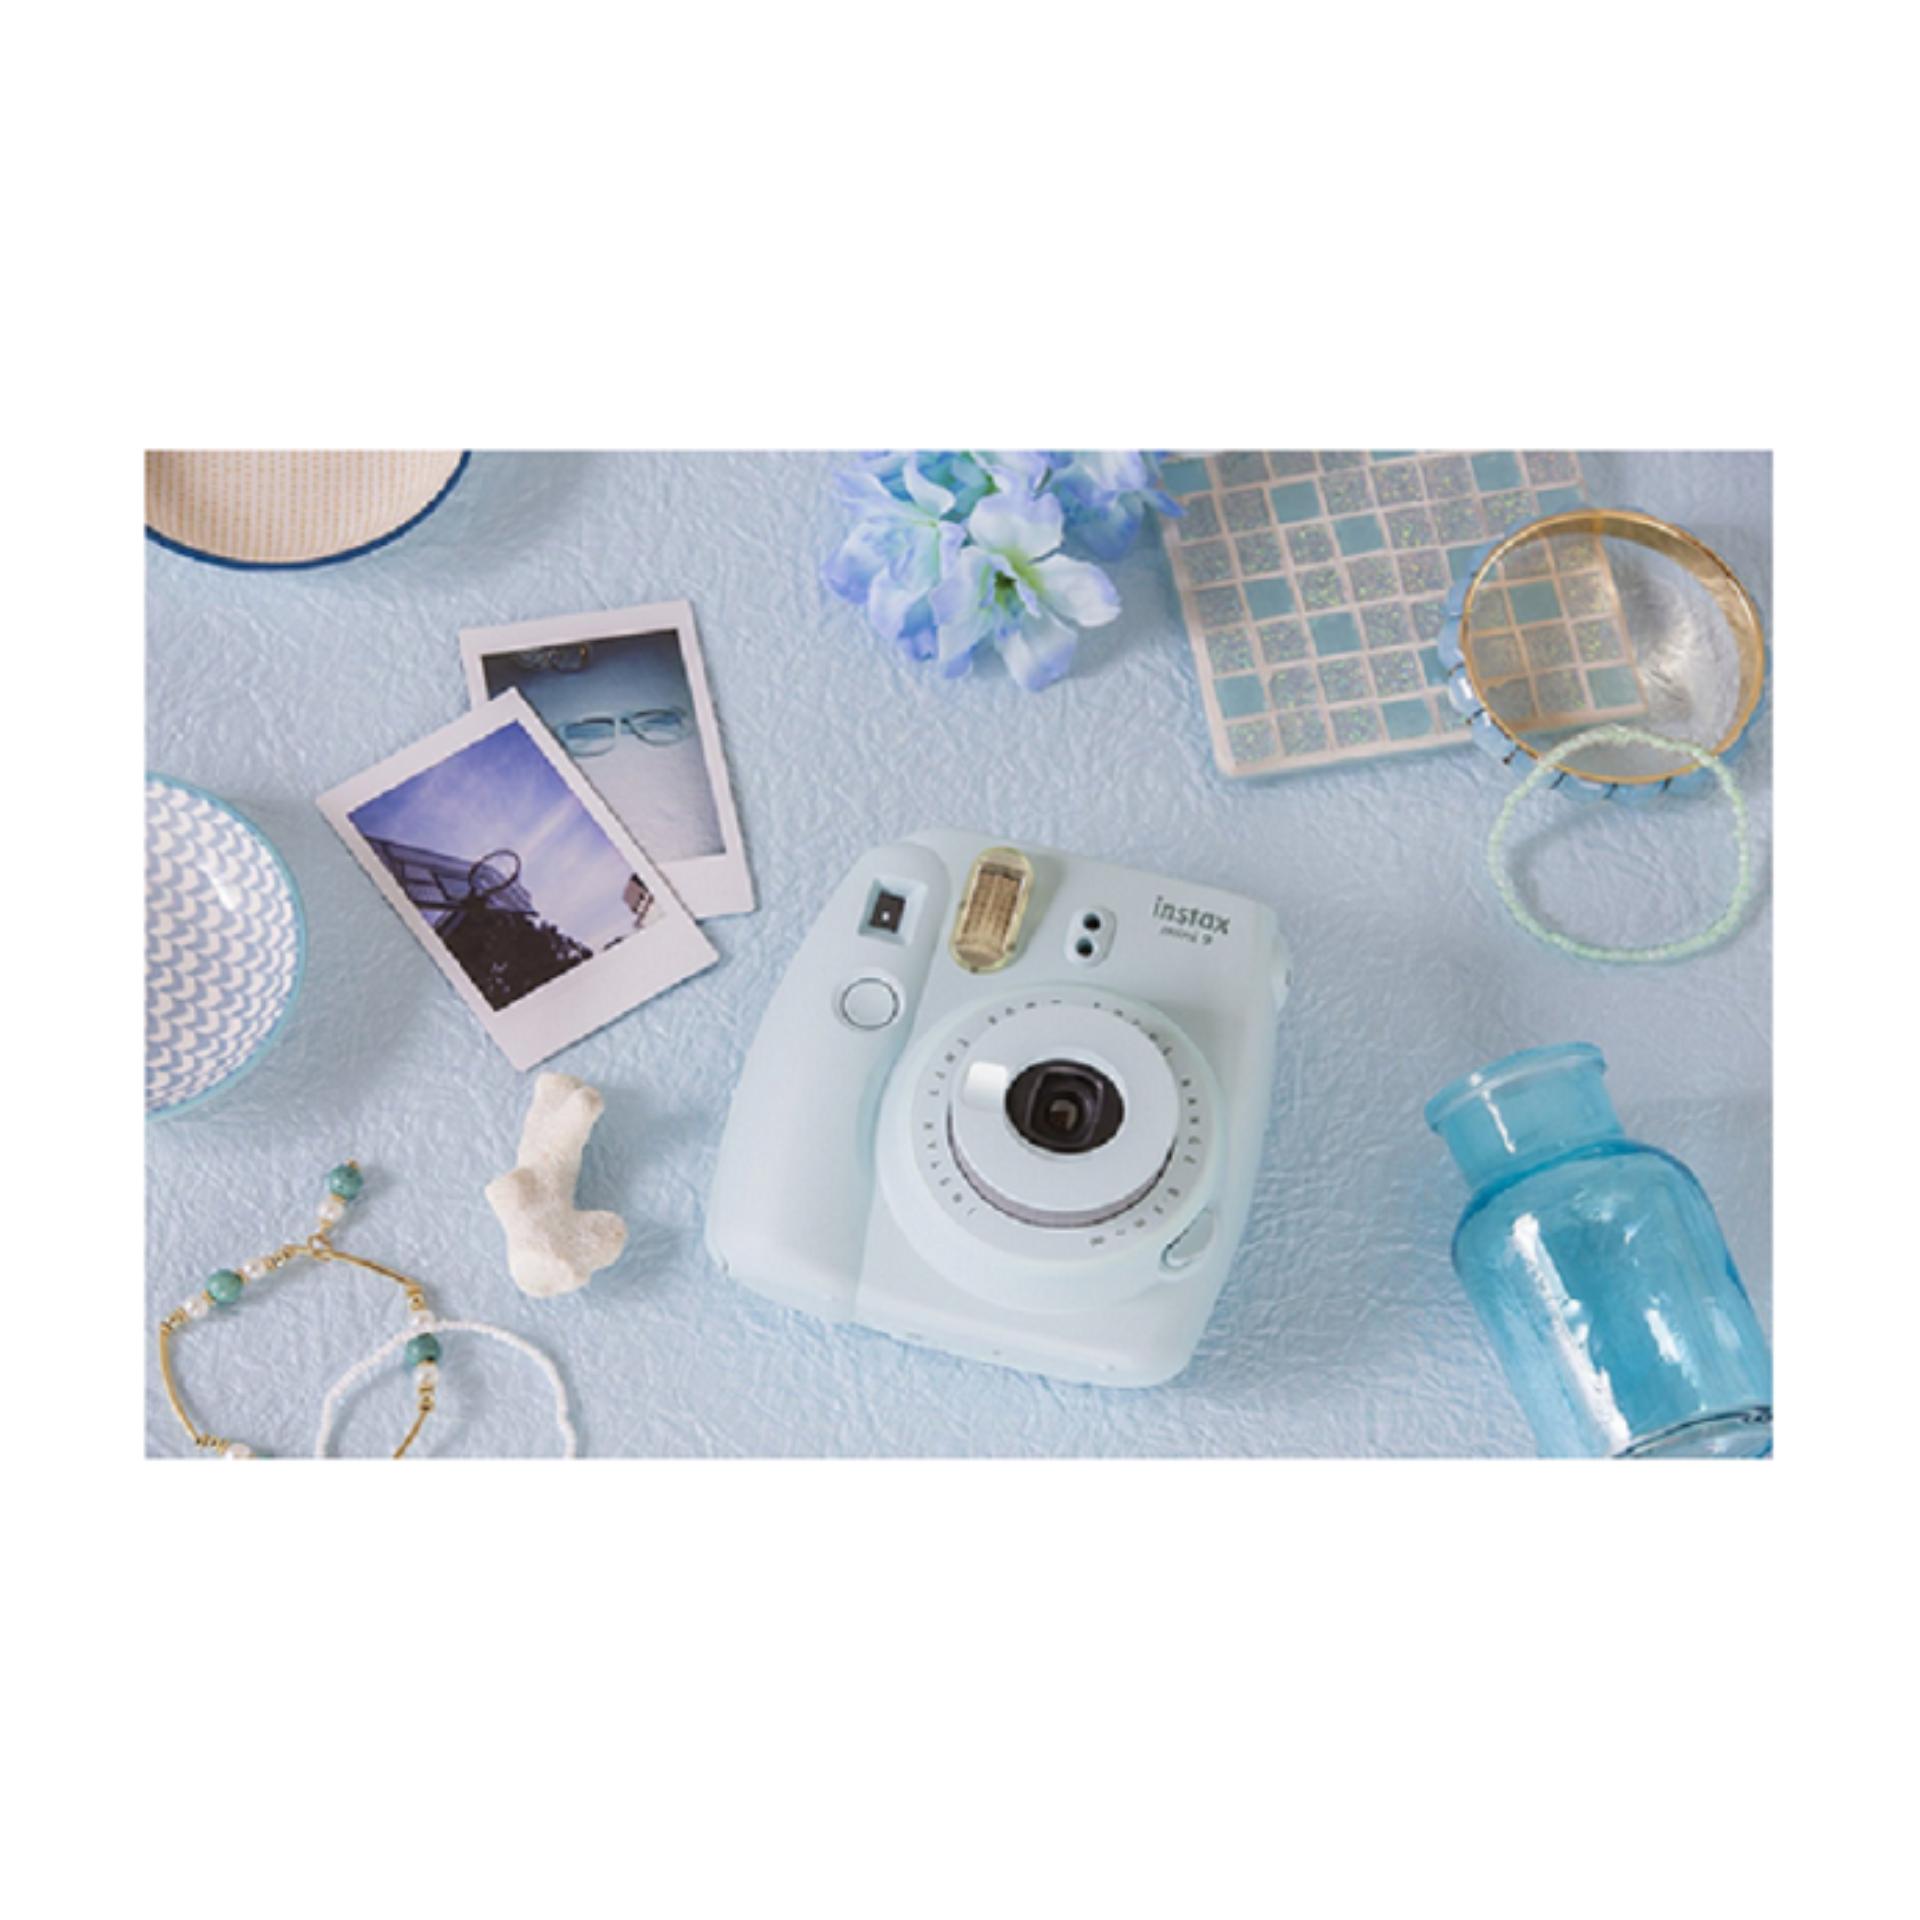 Fujifilm Instax Mini 9 Instant Camera Ice Blue + Free Bundle Gifts